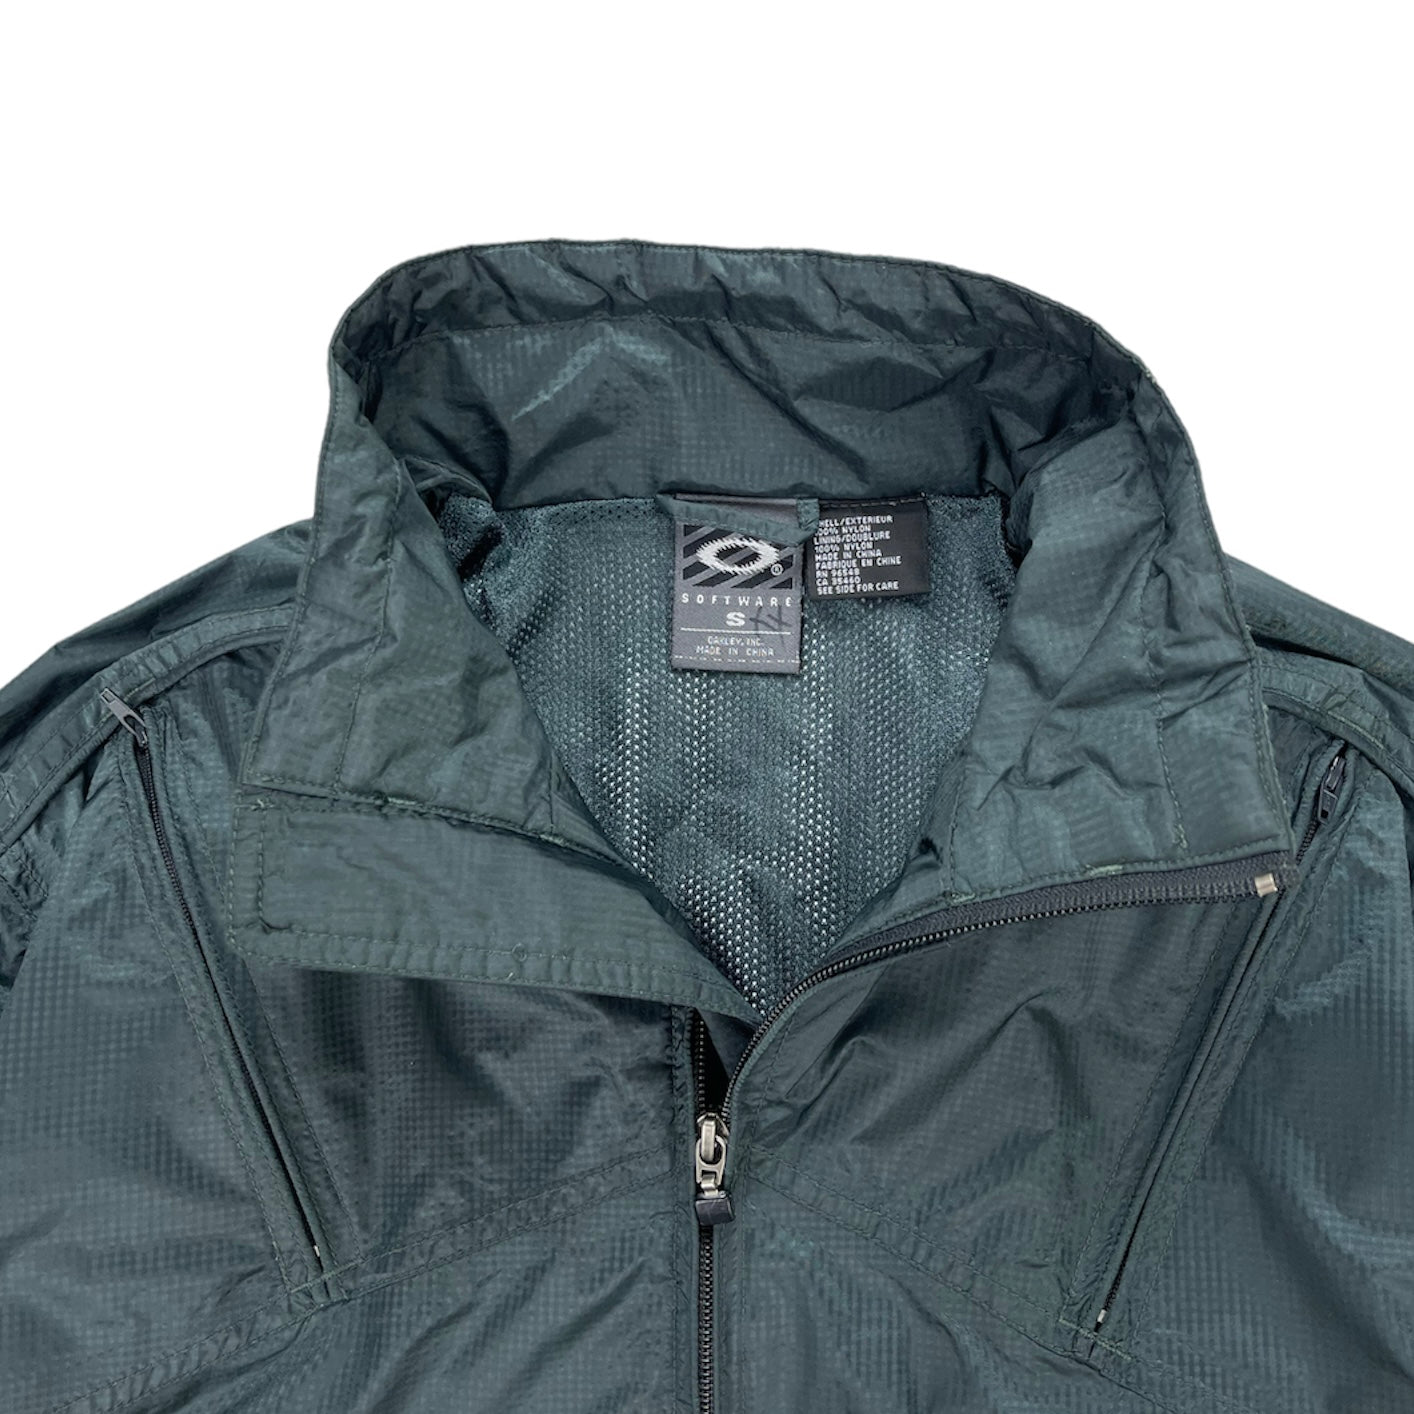 2000s Oakley Software toggle jacket